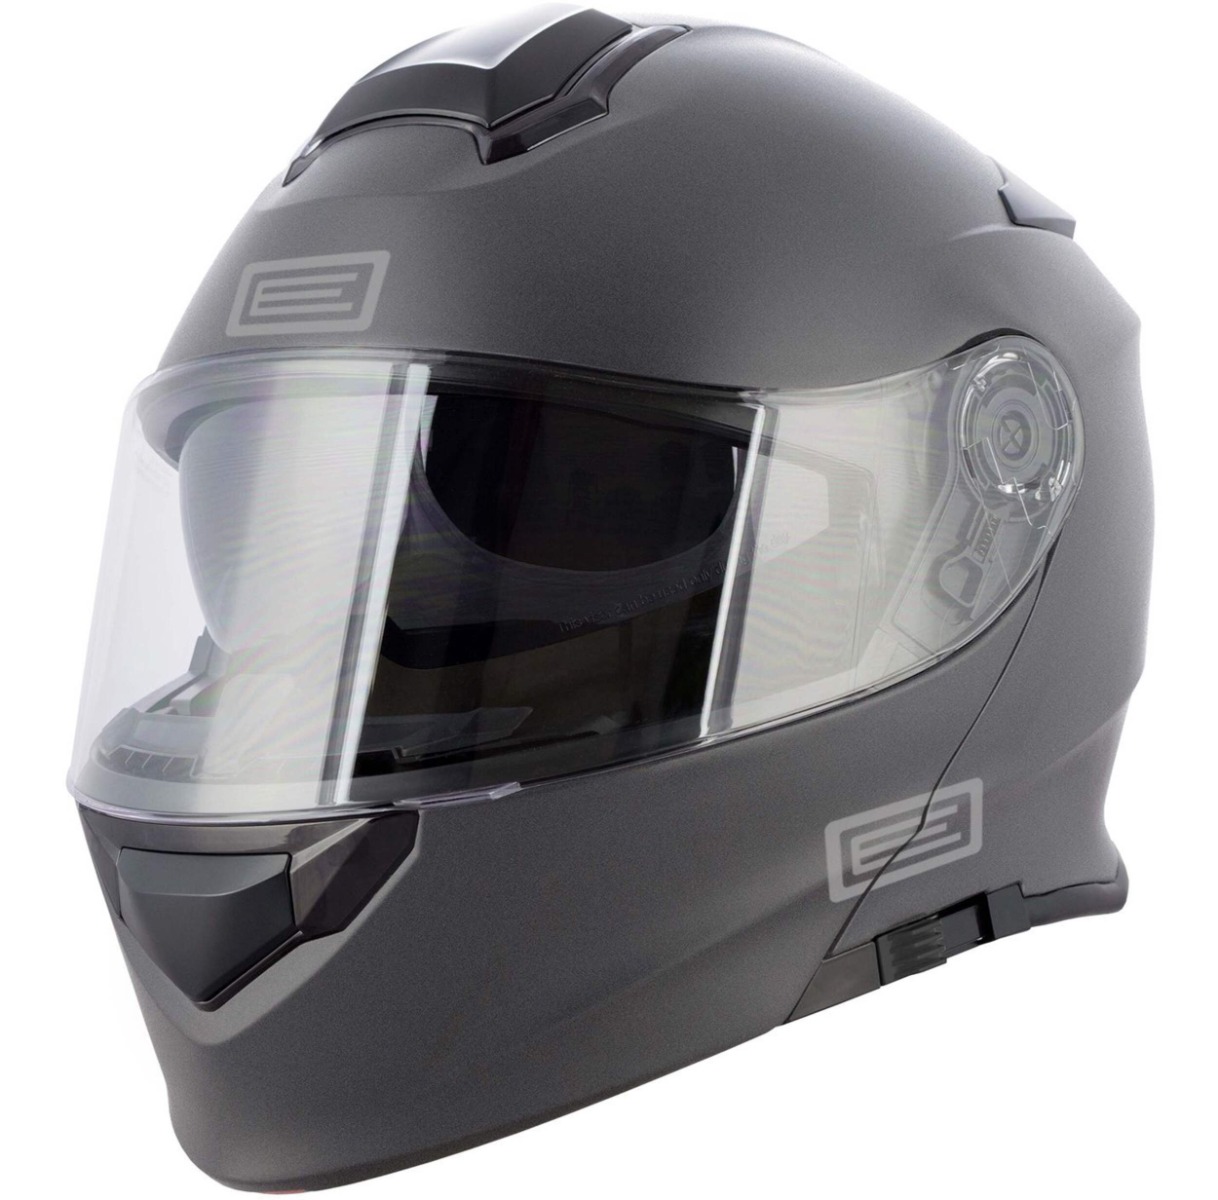 Origine Corsa Snow Motorcycle Modular Helmet, Adult - Size L